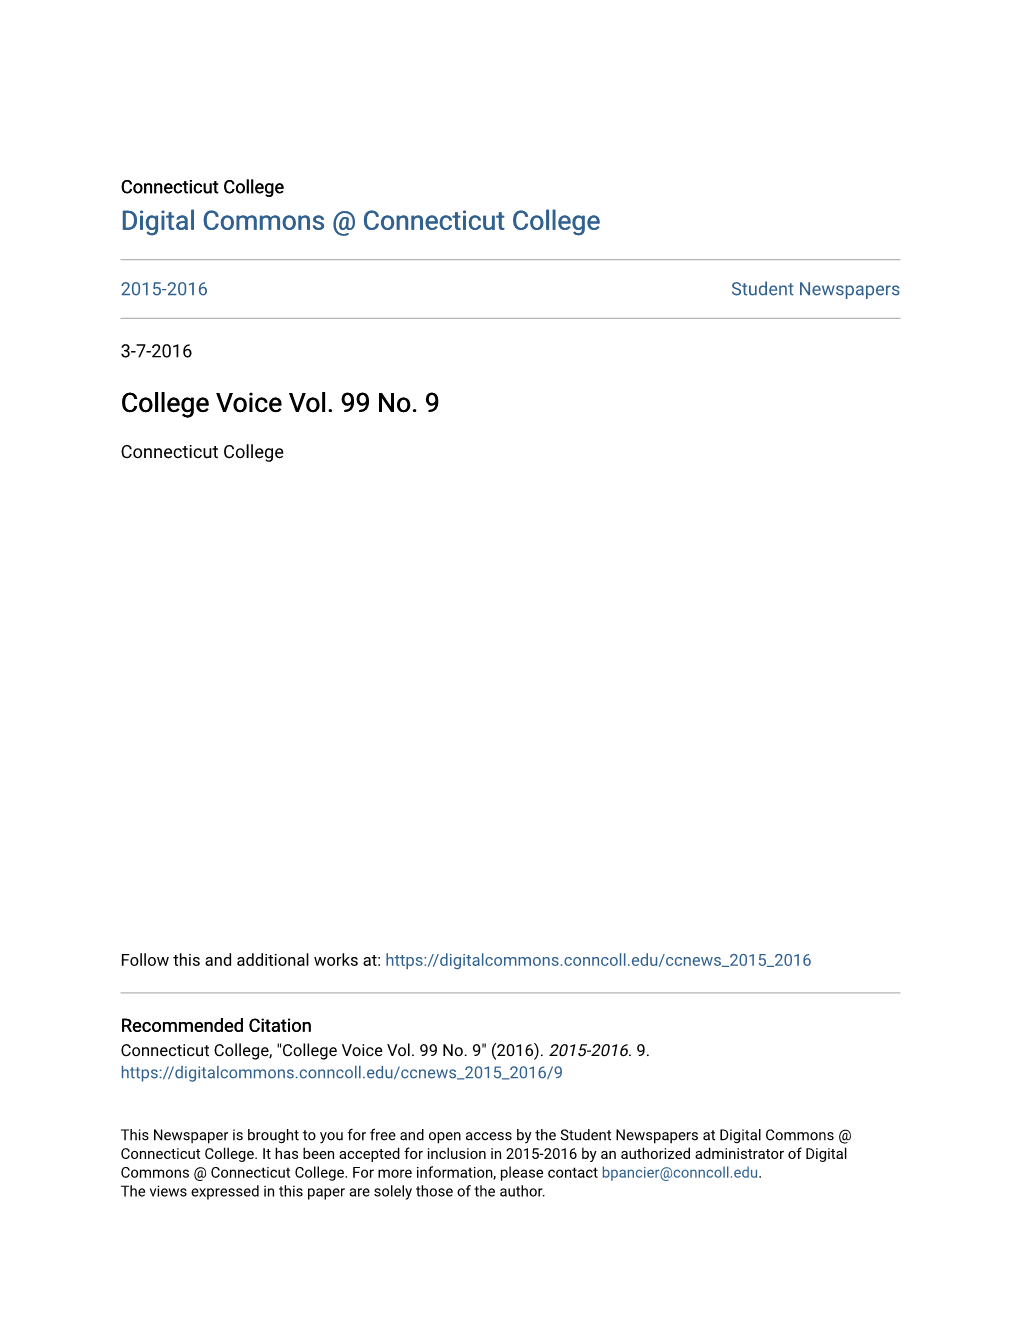 College Voice Vol. 99 No. 9